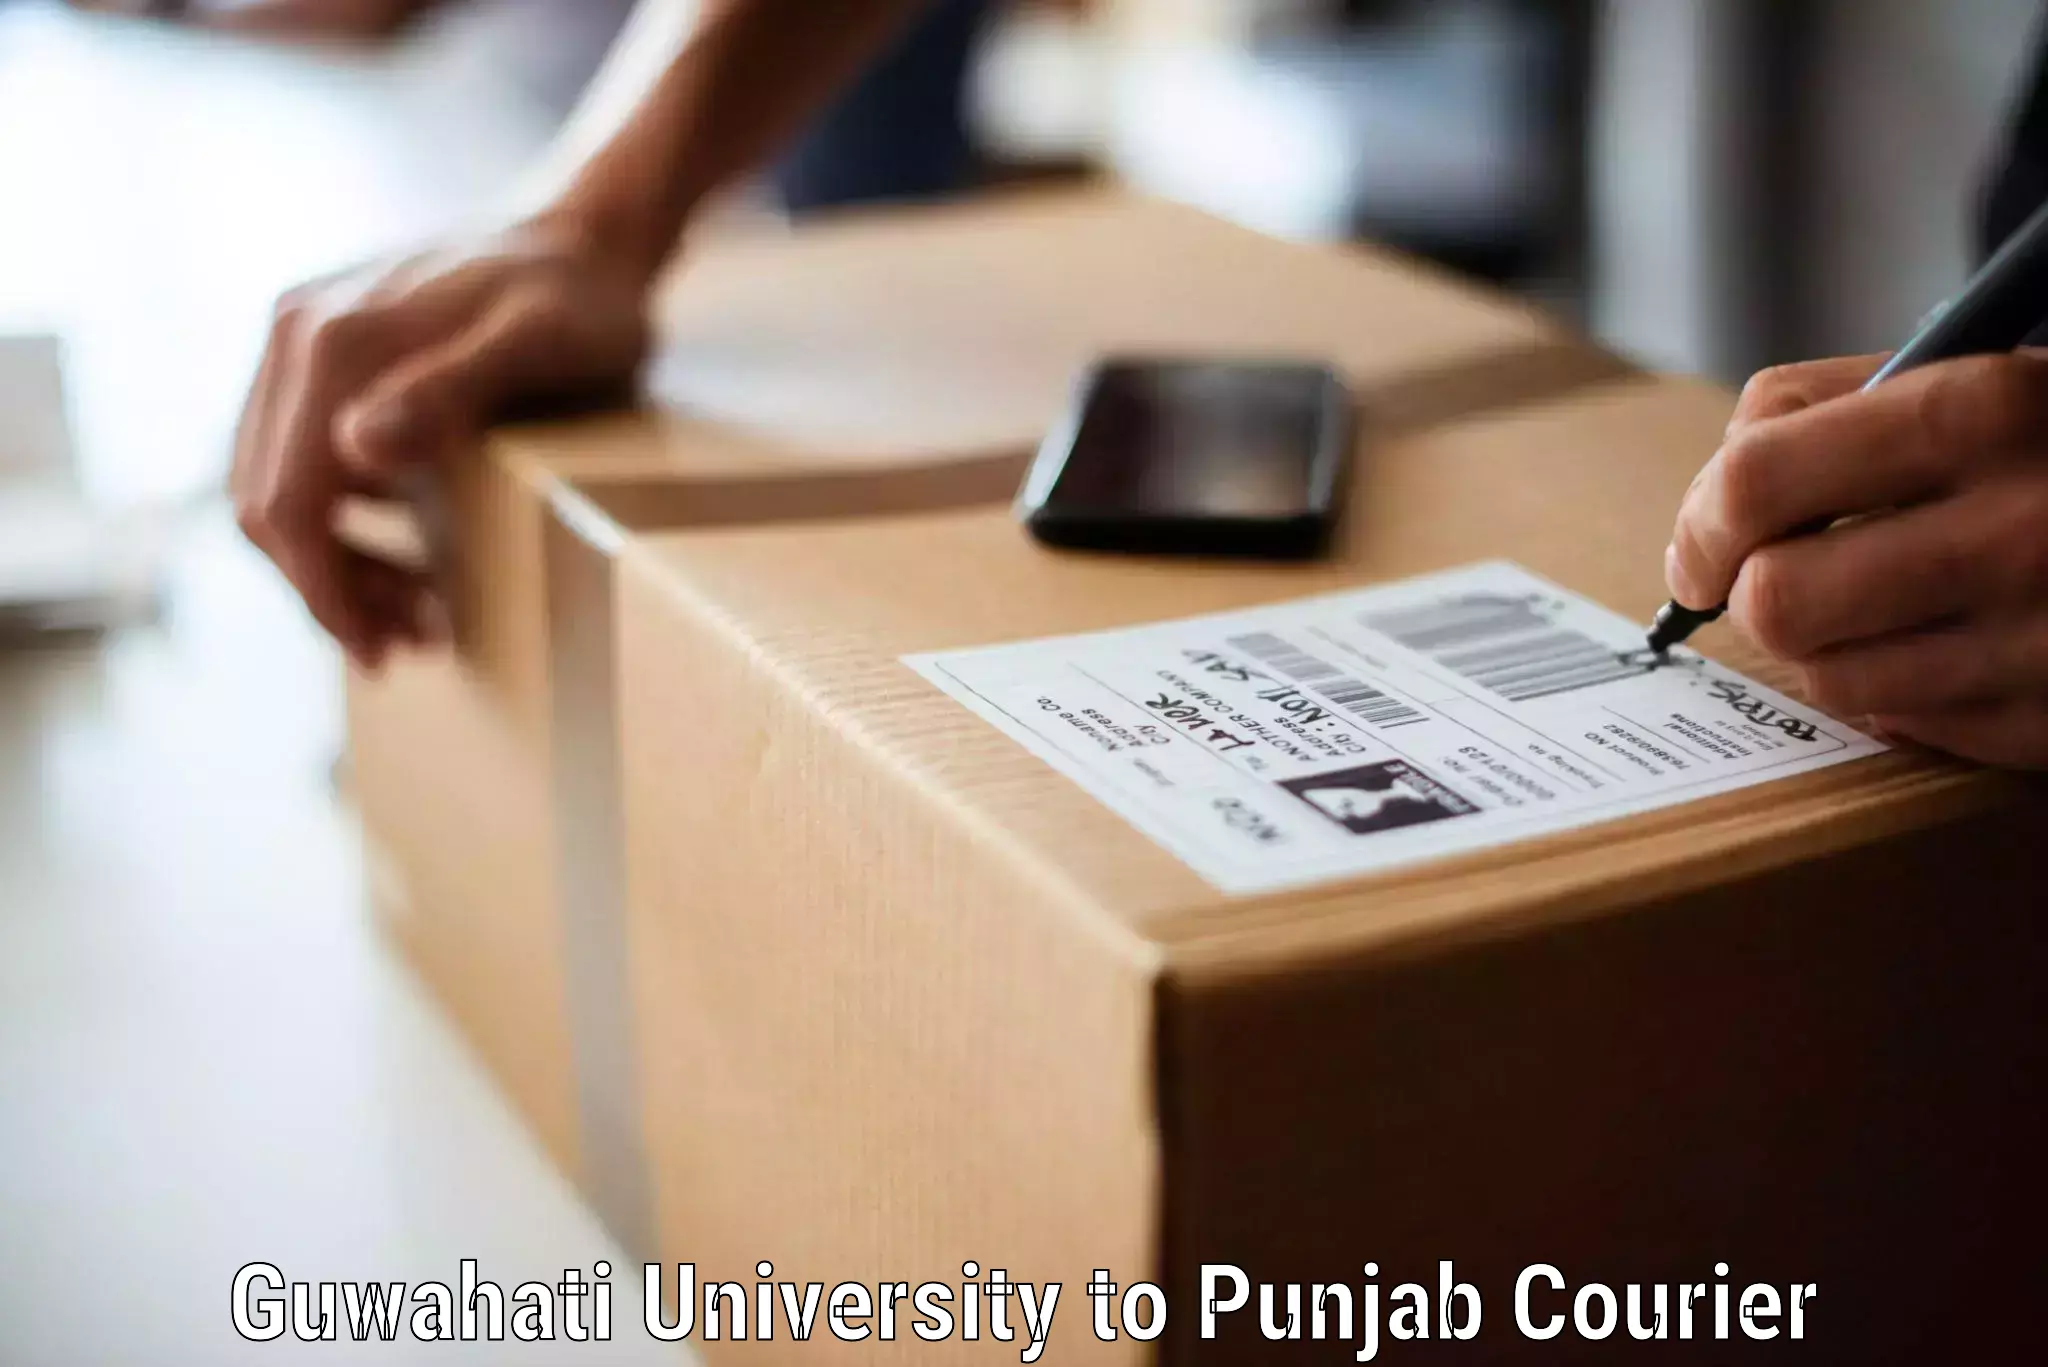 Moving and storage services Guwahati University to Punjab